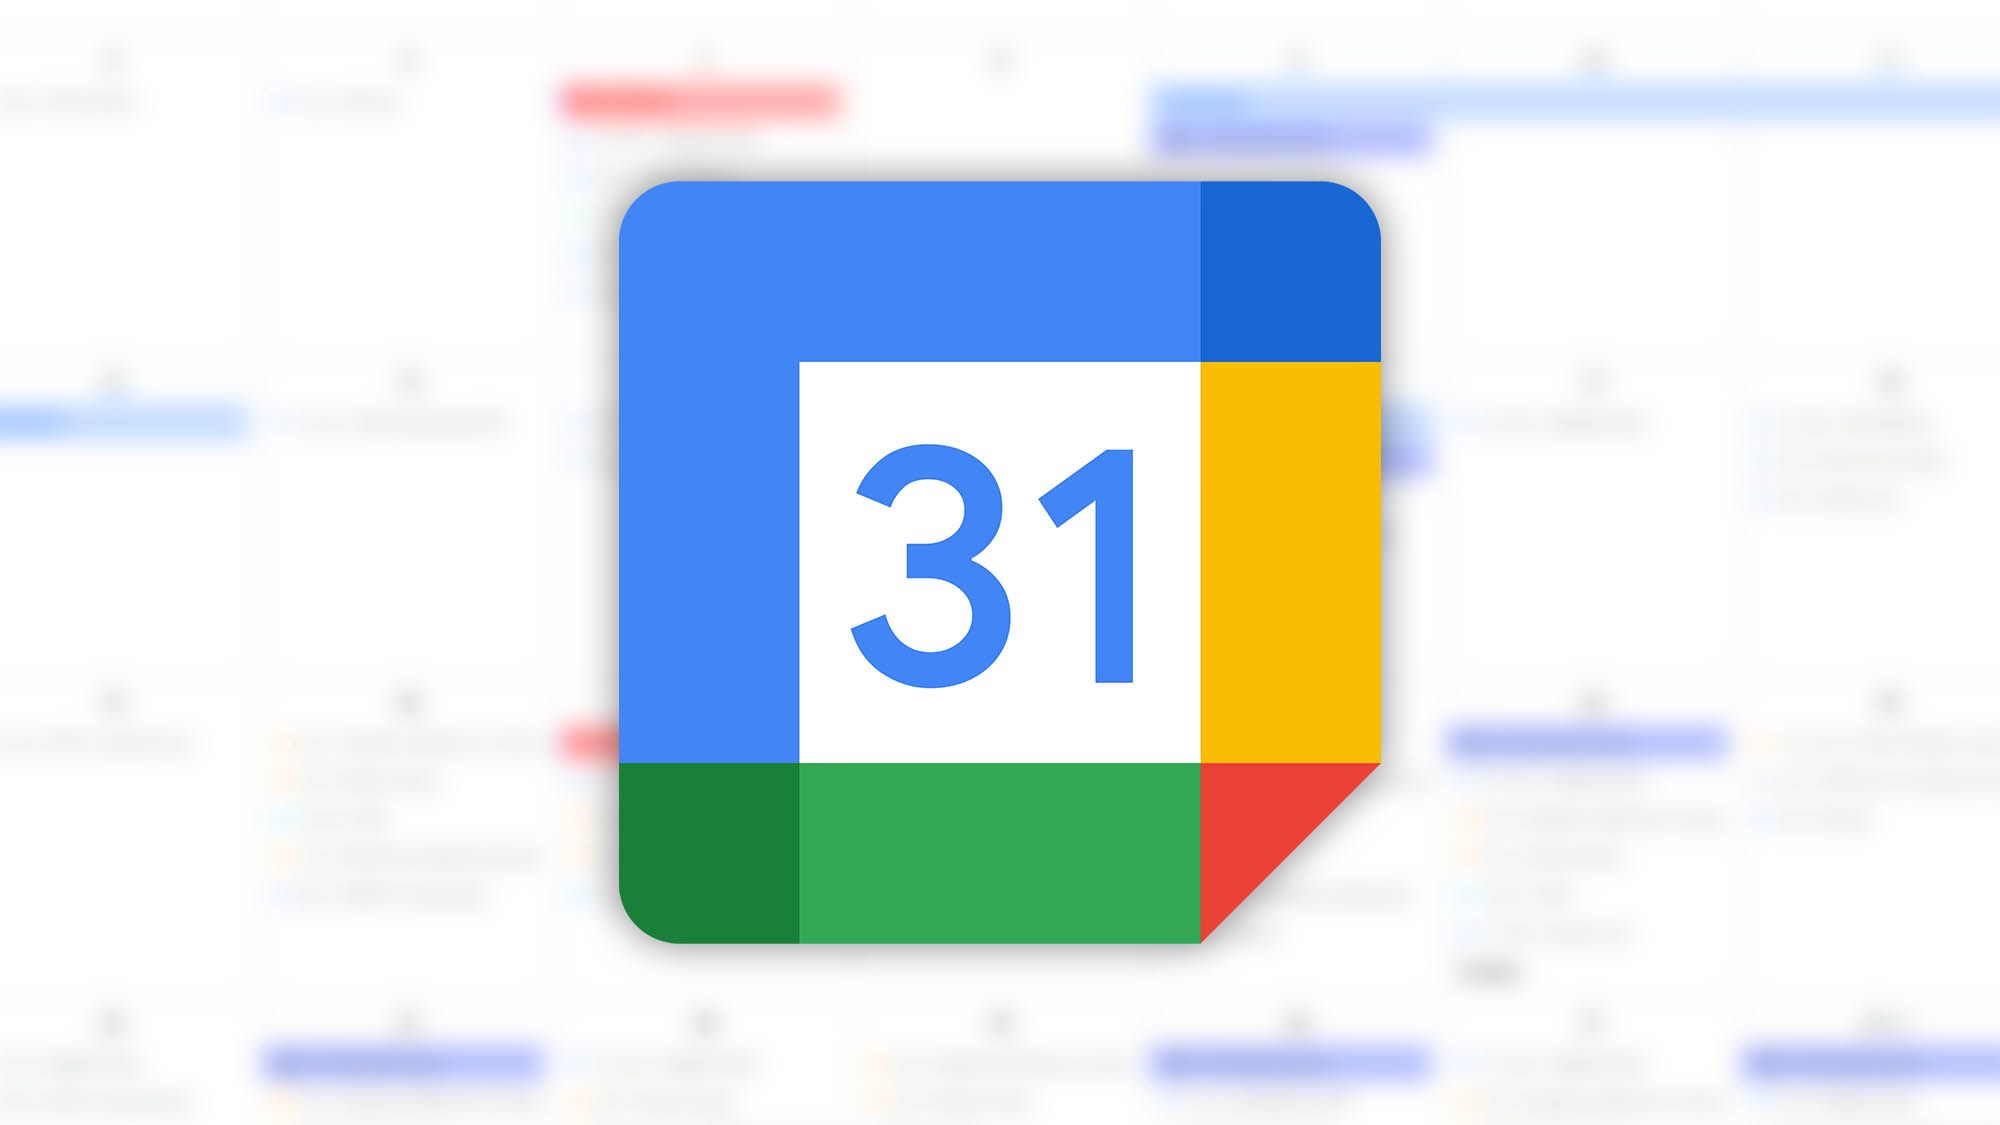 The Google Calendar logo on top of a blurred image of a calendar